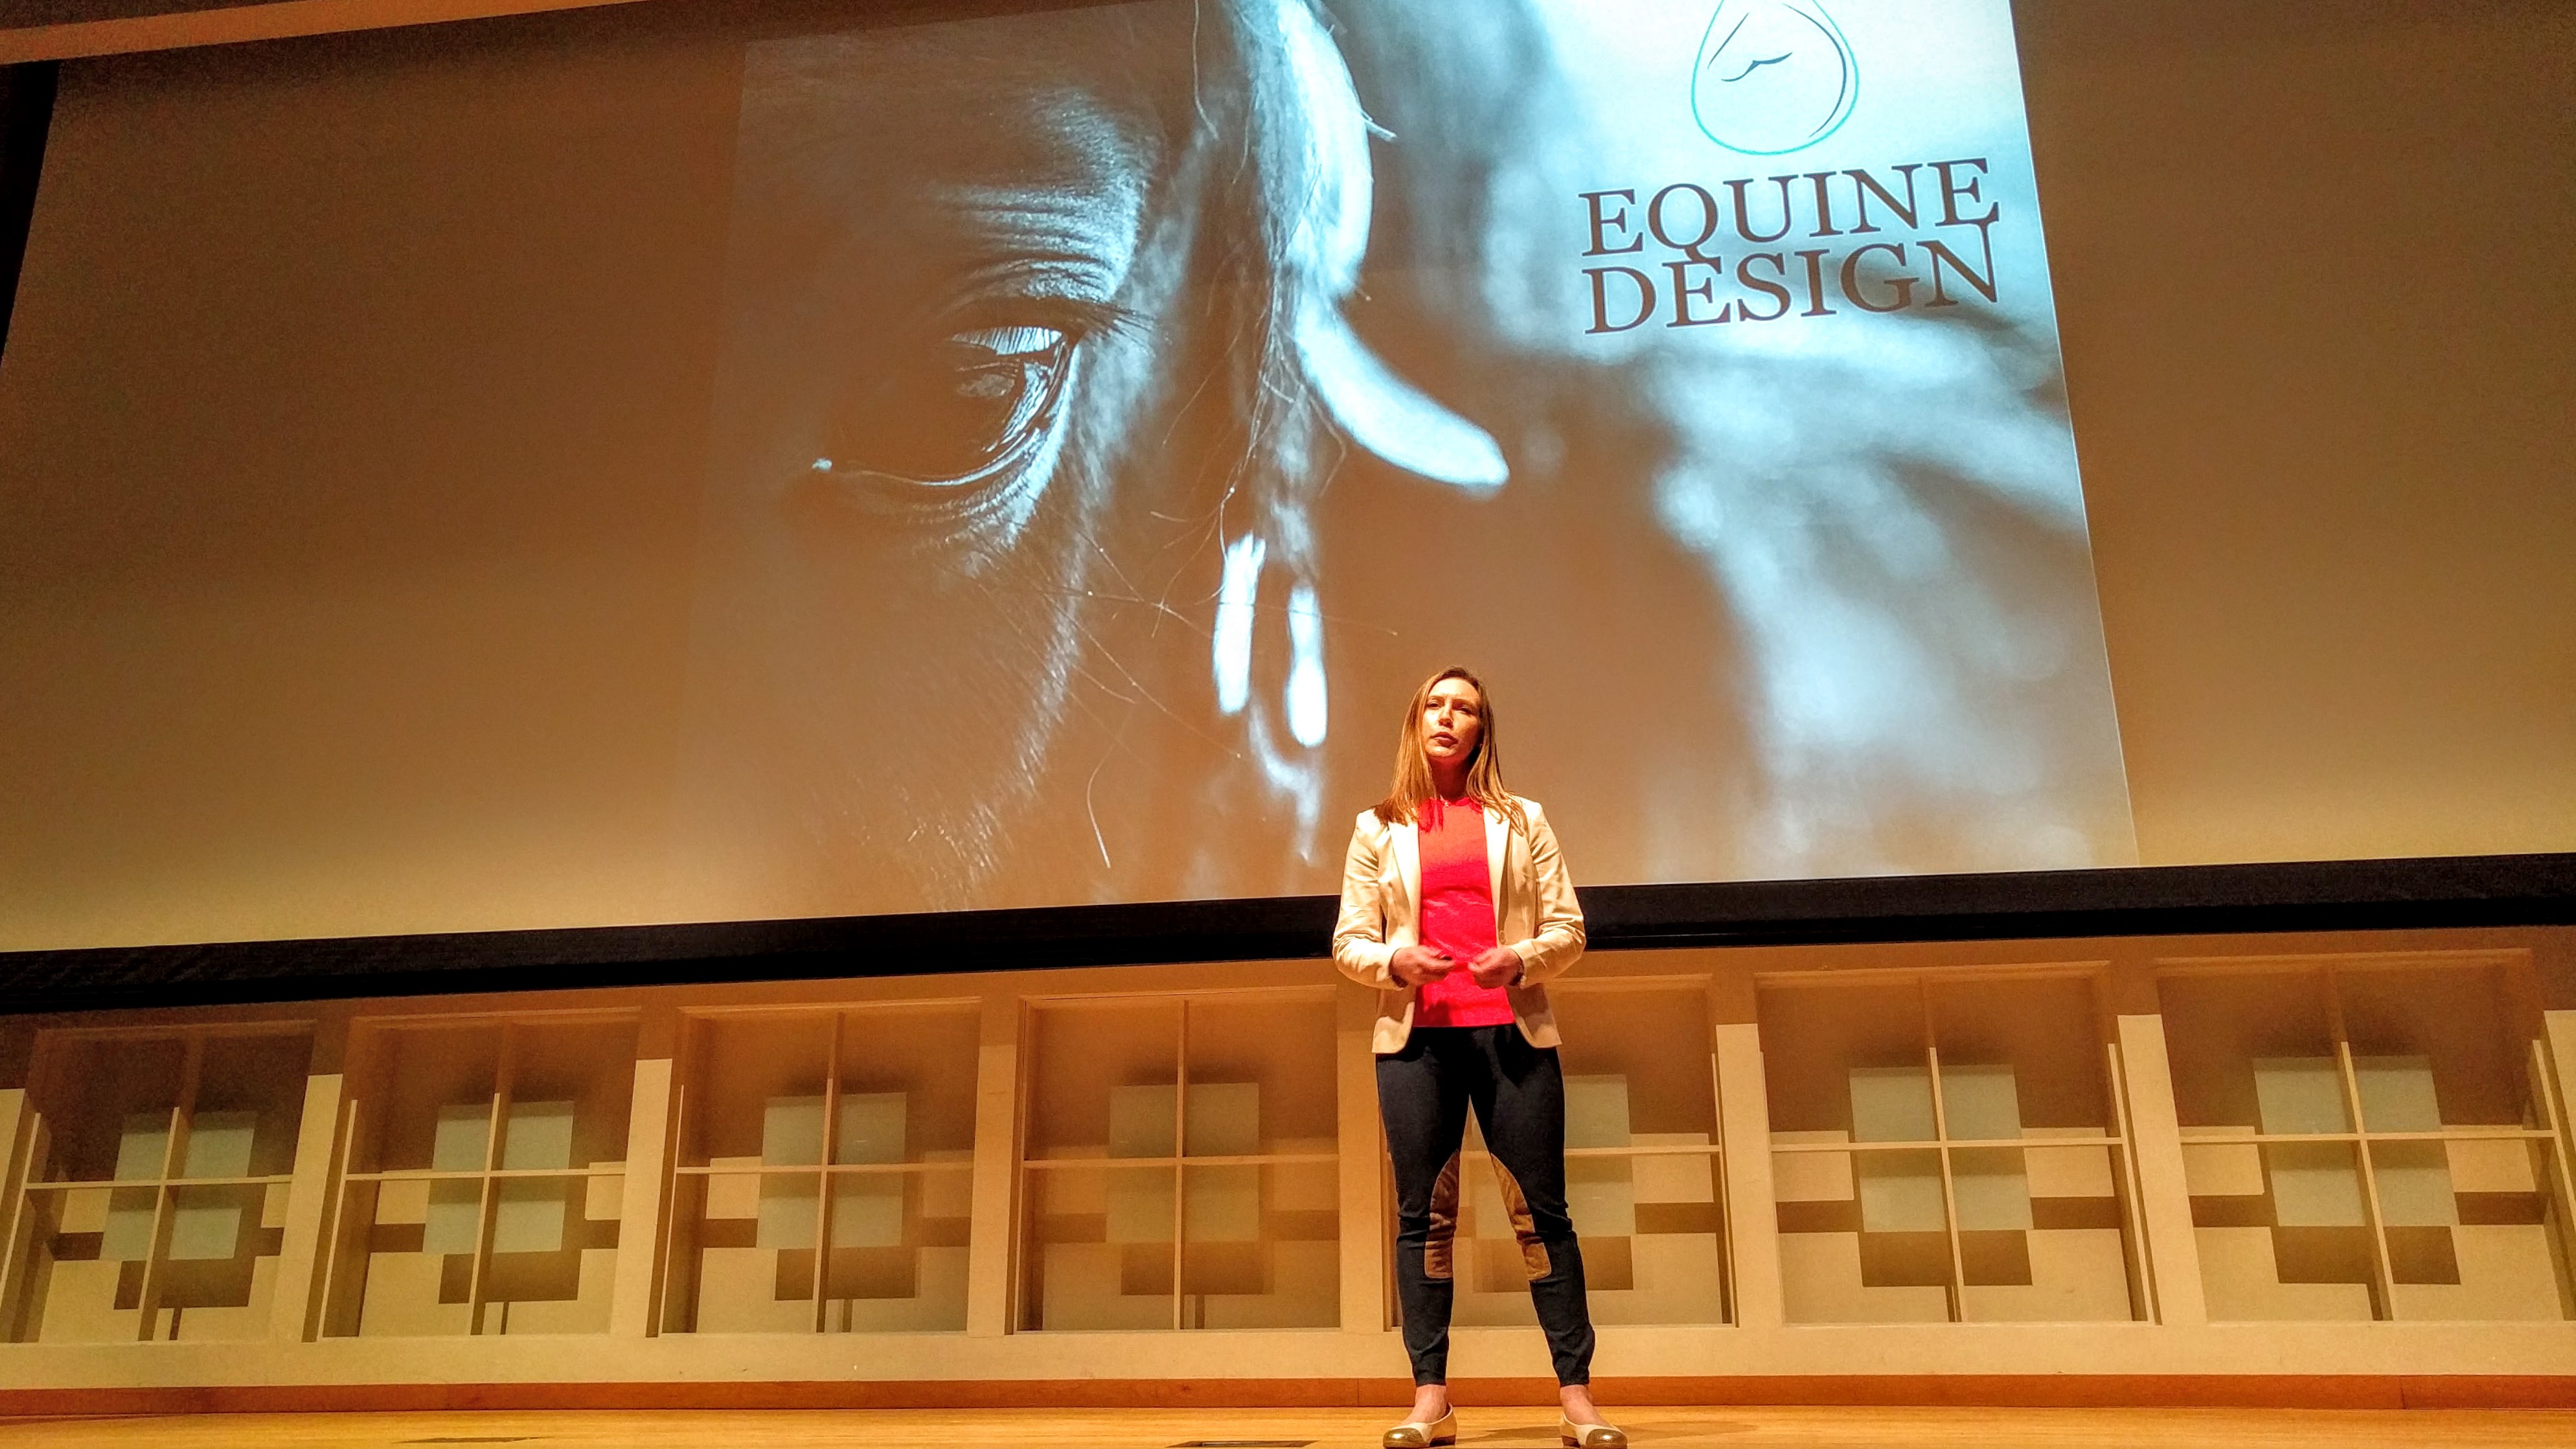 Caitlin Parrucci presenting Equine Design at the eLab Demo Day. PC: Brad Treat